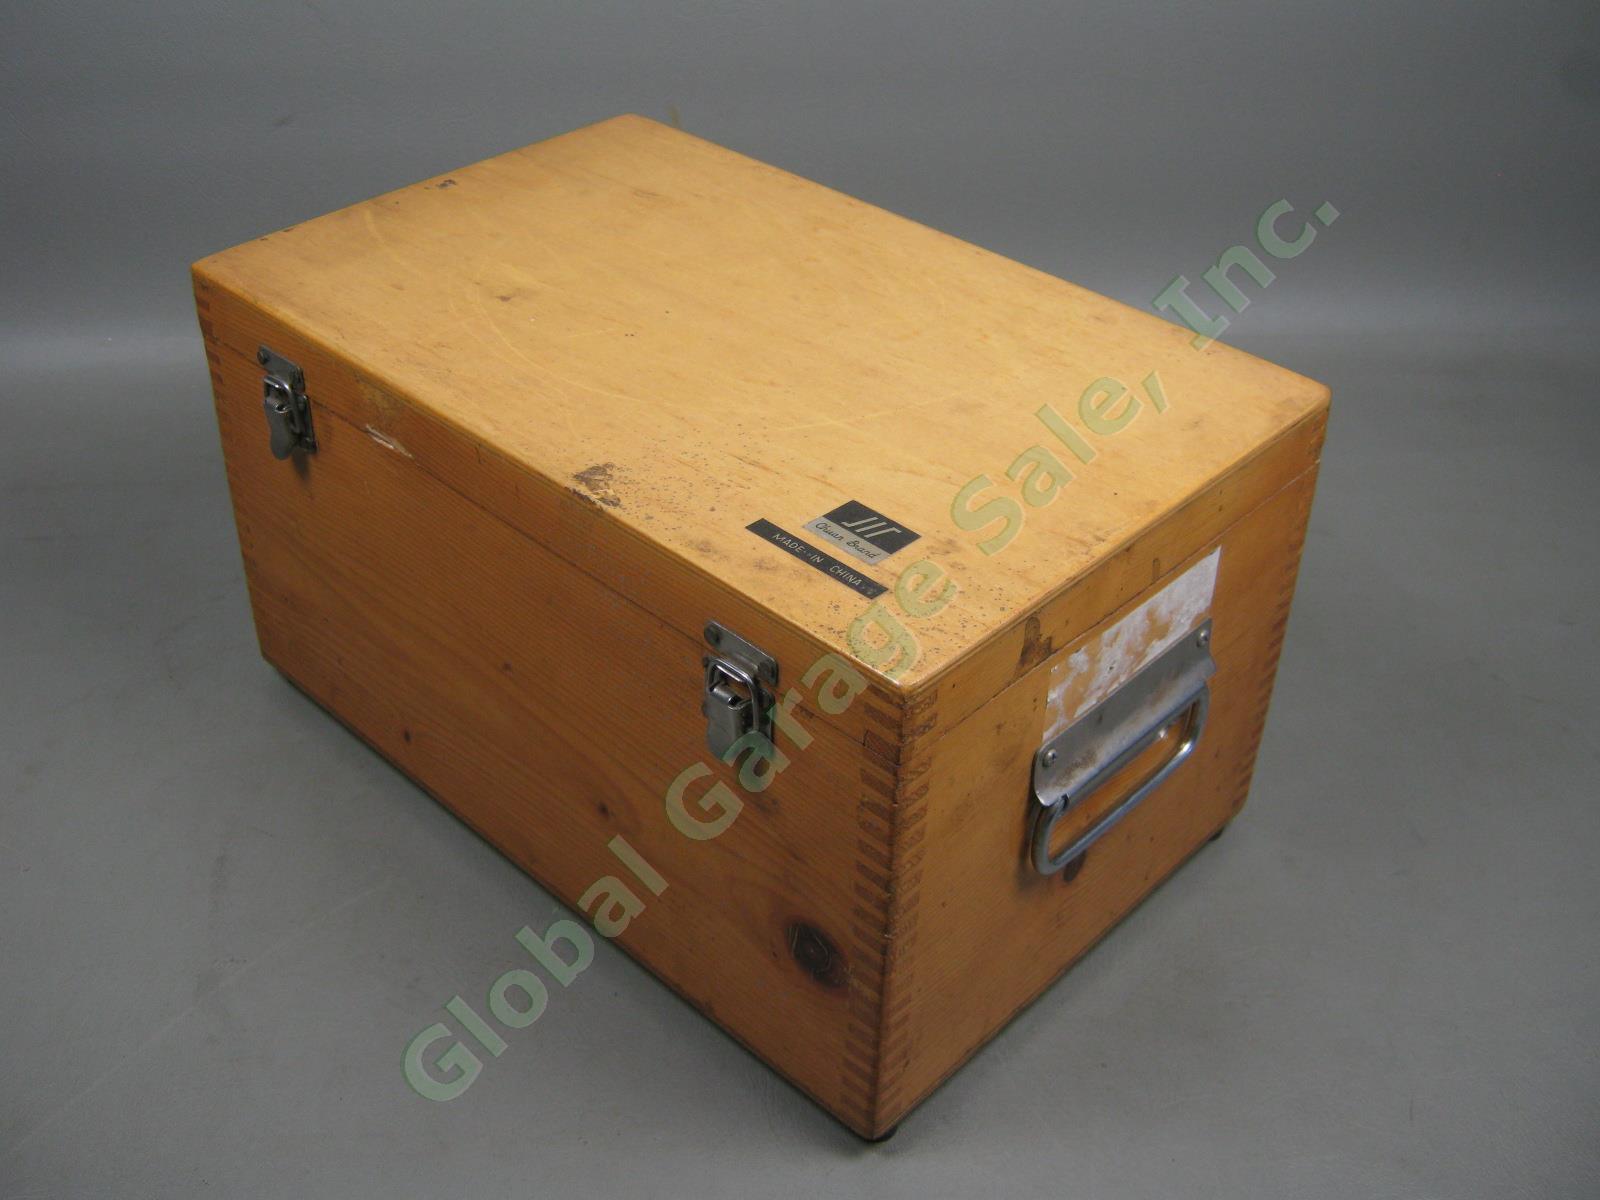 Chuan Brand Outside Micrometer Caliper Set 0-12" in W/ Wood Wooden Storage Case 5